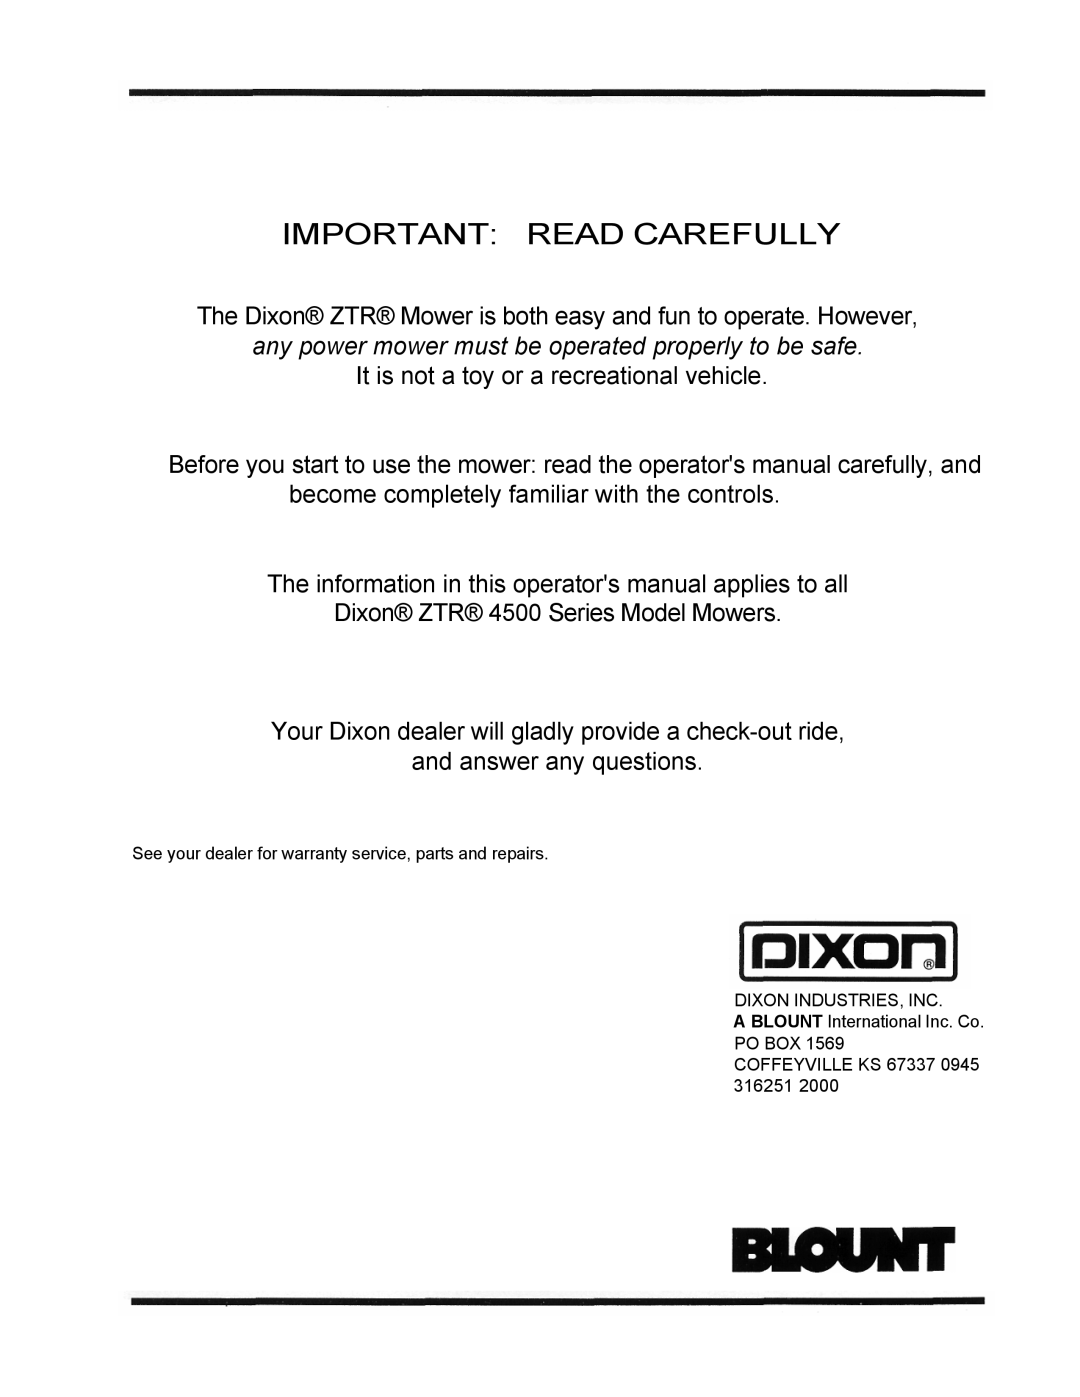 Dixon 4500 Series manual Important Read Carefully 